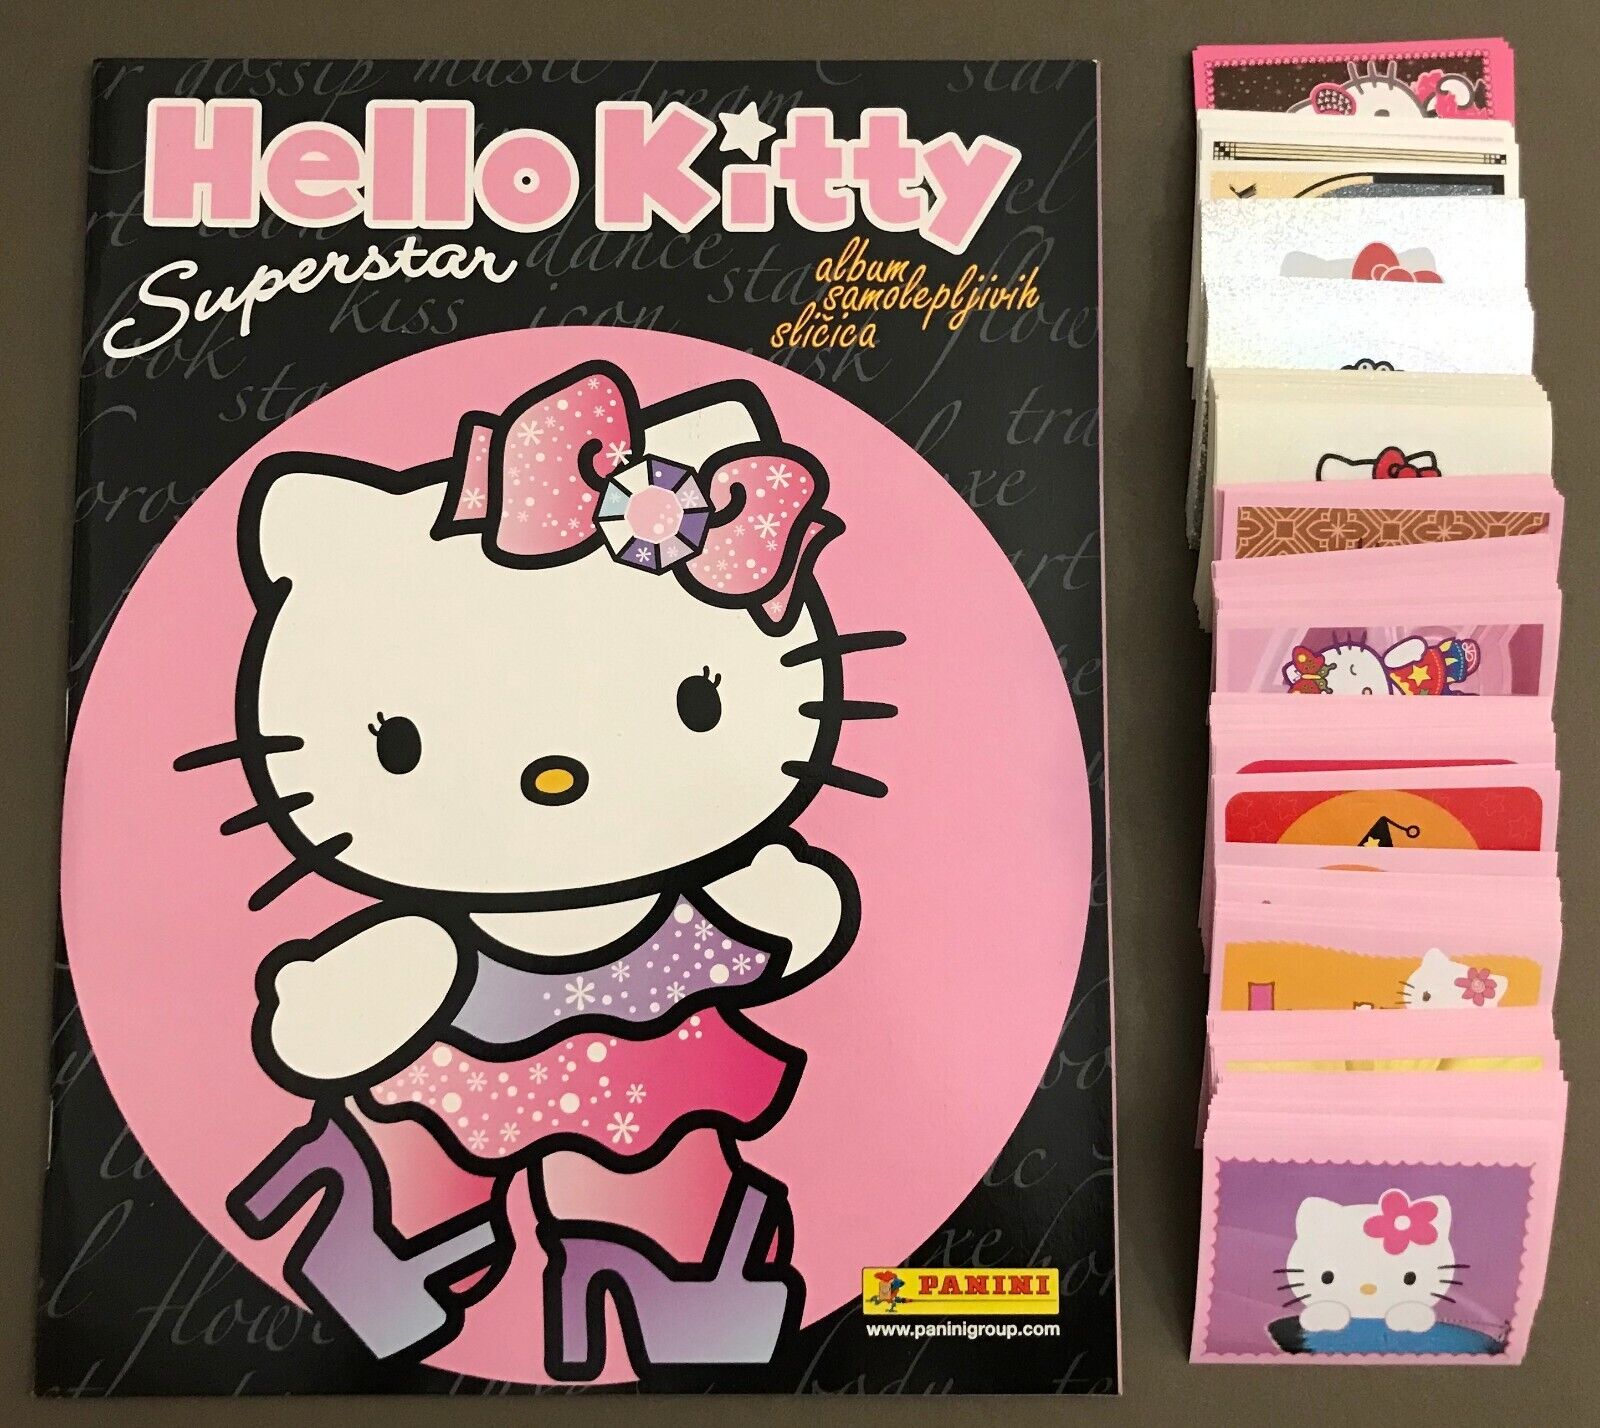 2009 Panini Hello Kitty Superstar empty album and complete set